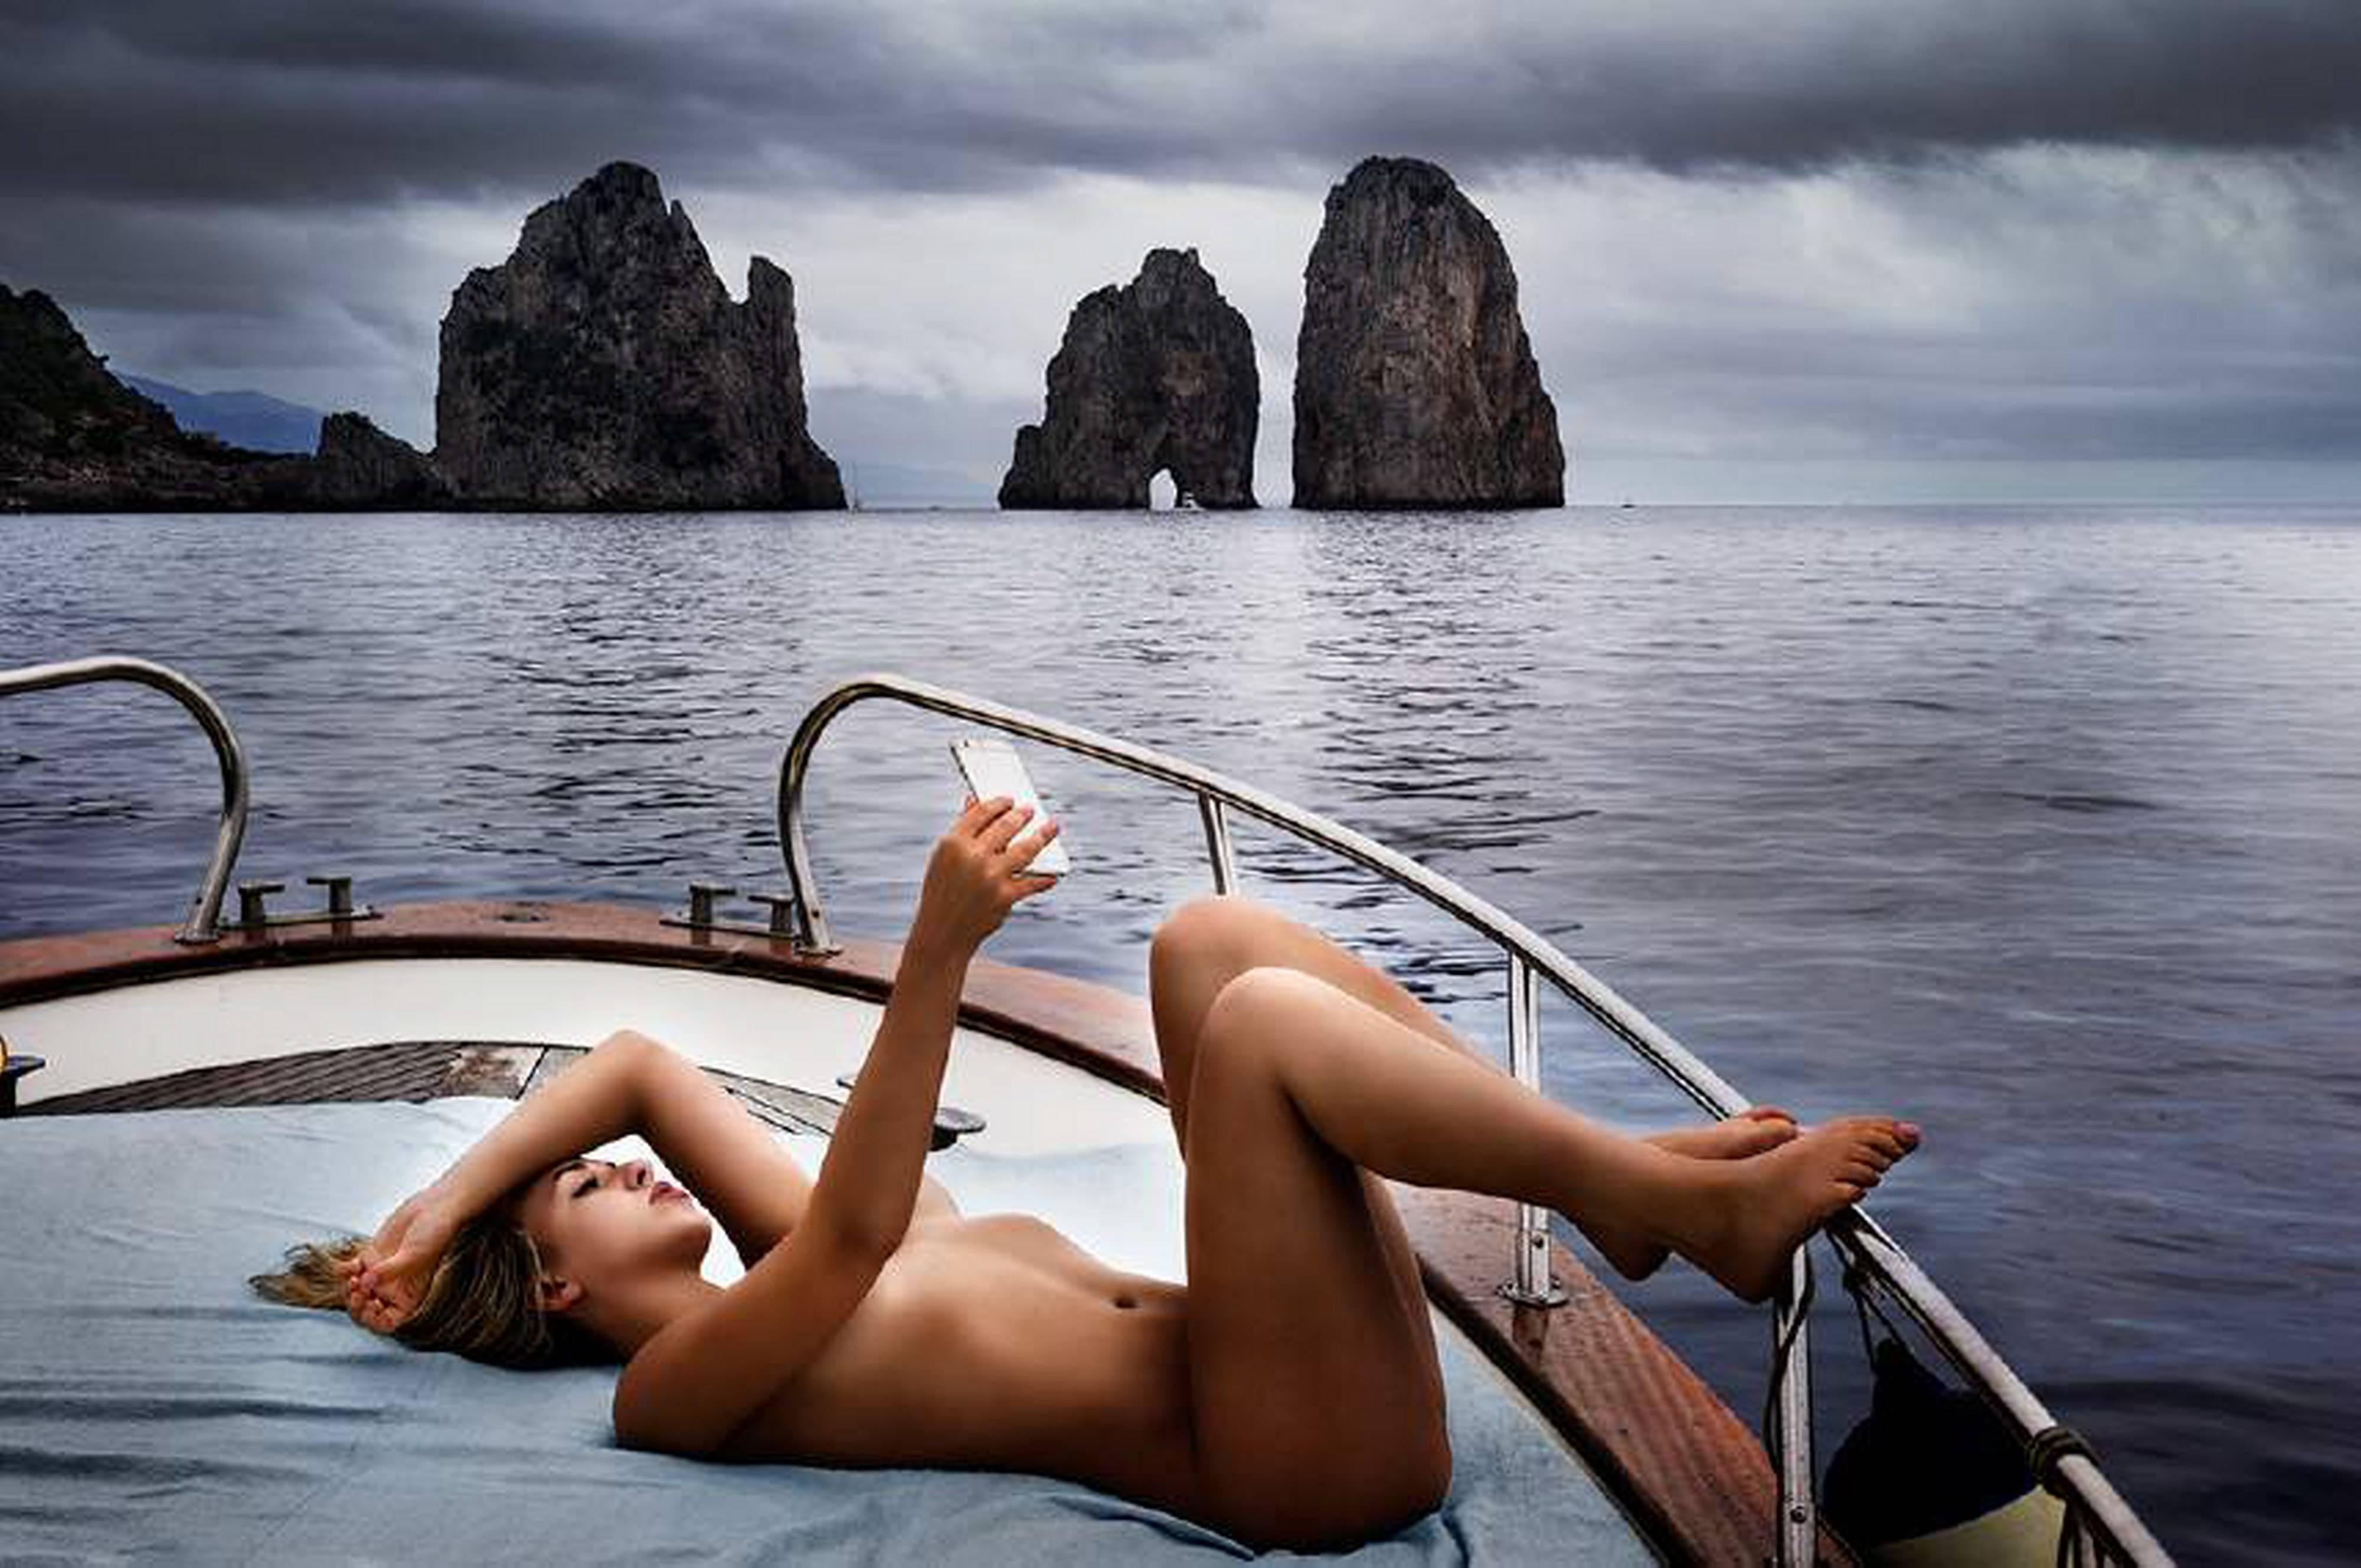 nudist boat cruise photos